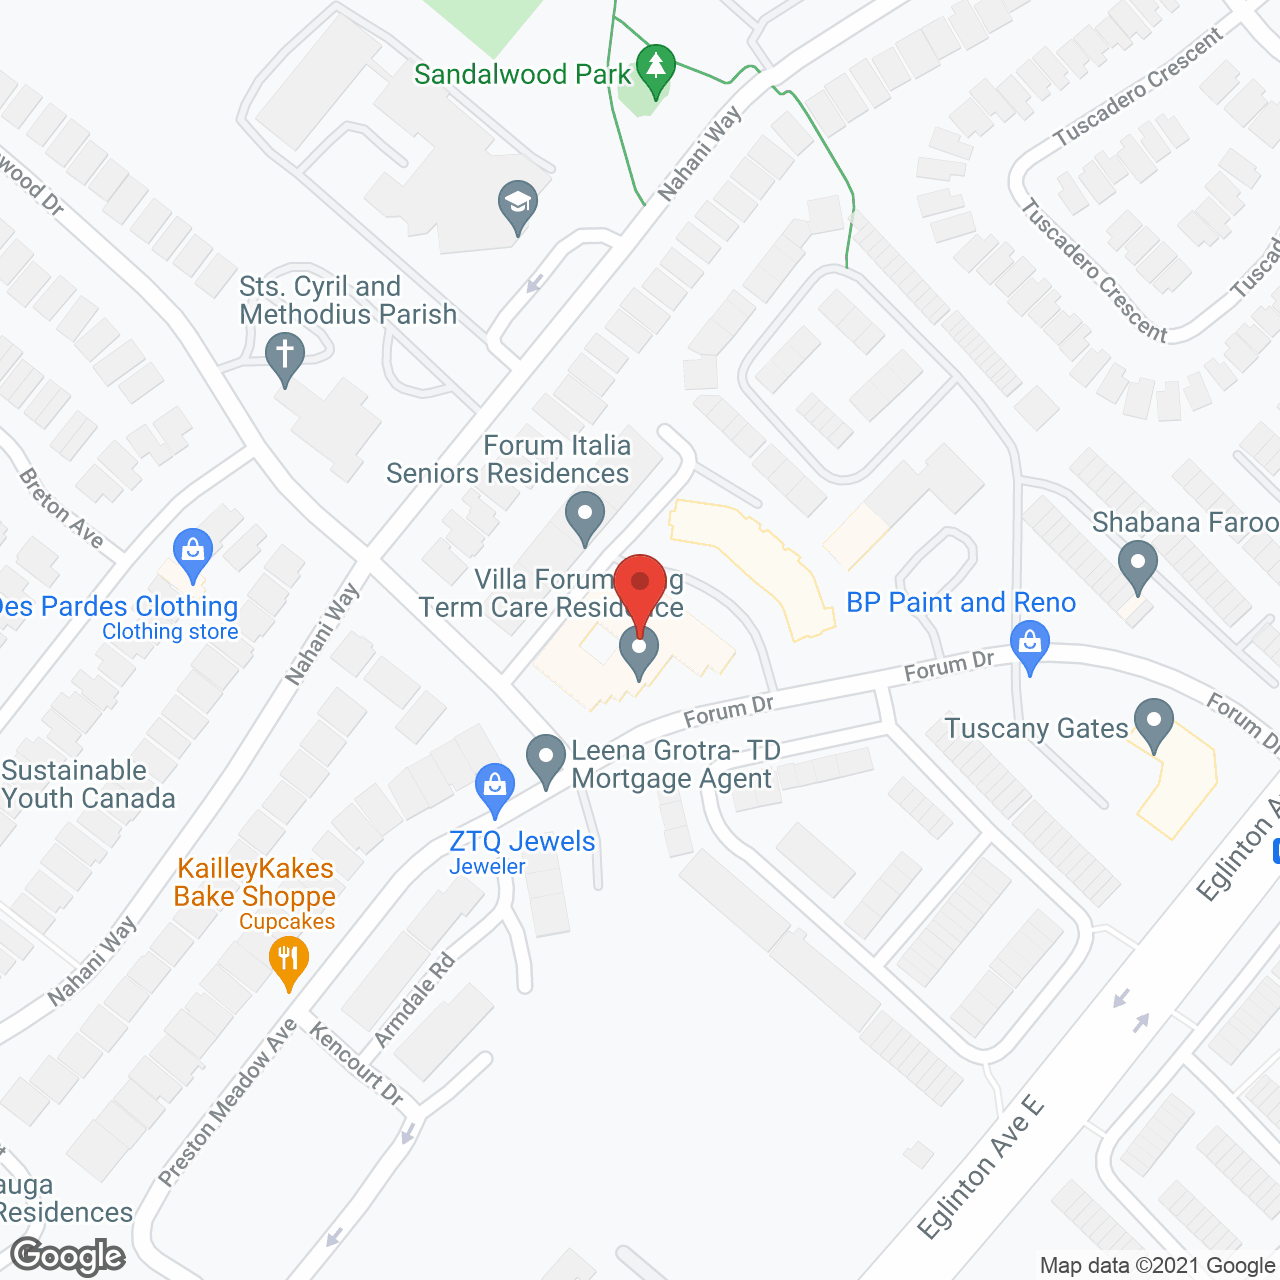 Villa Forum Long Term Care Residence in google map